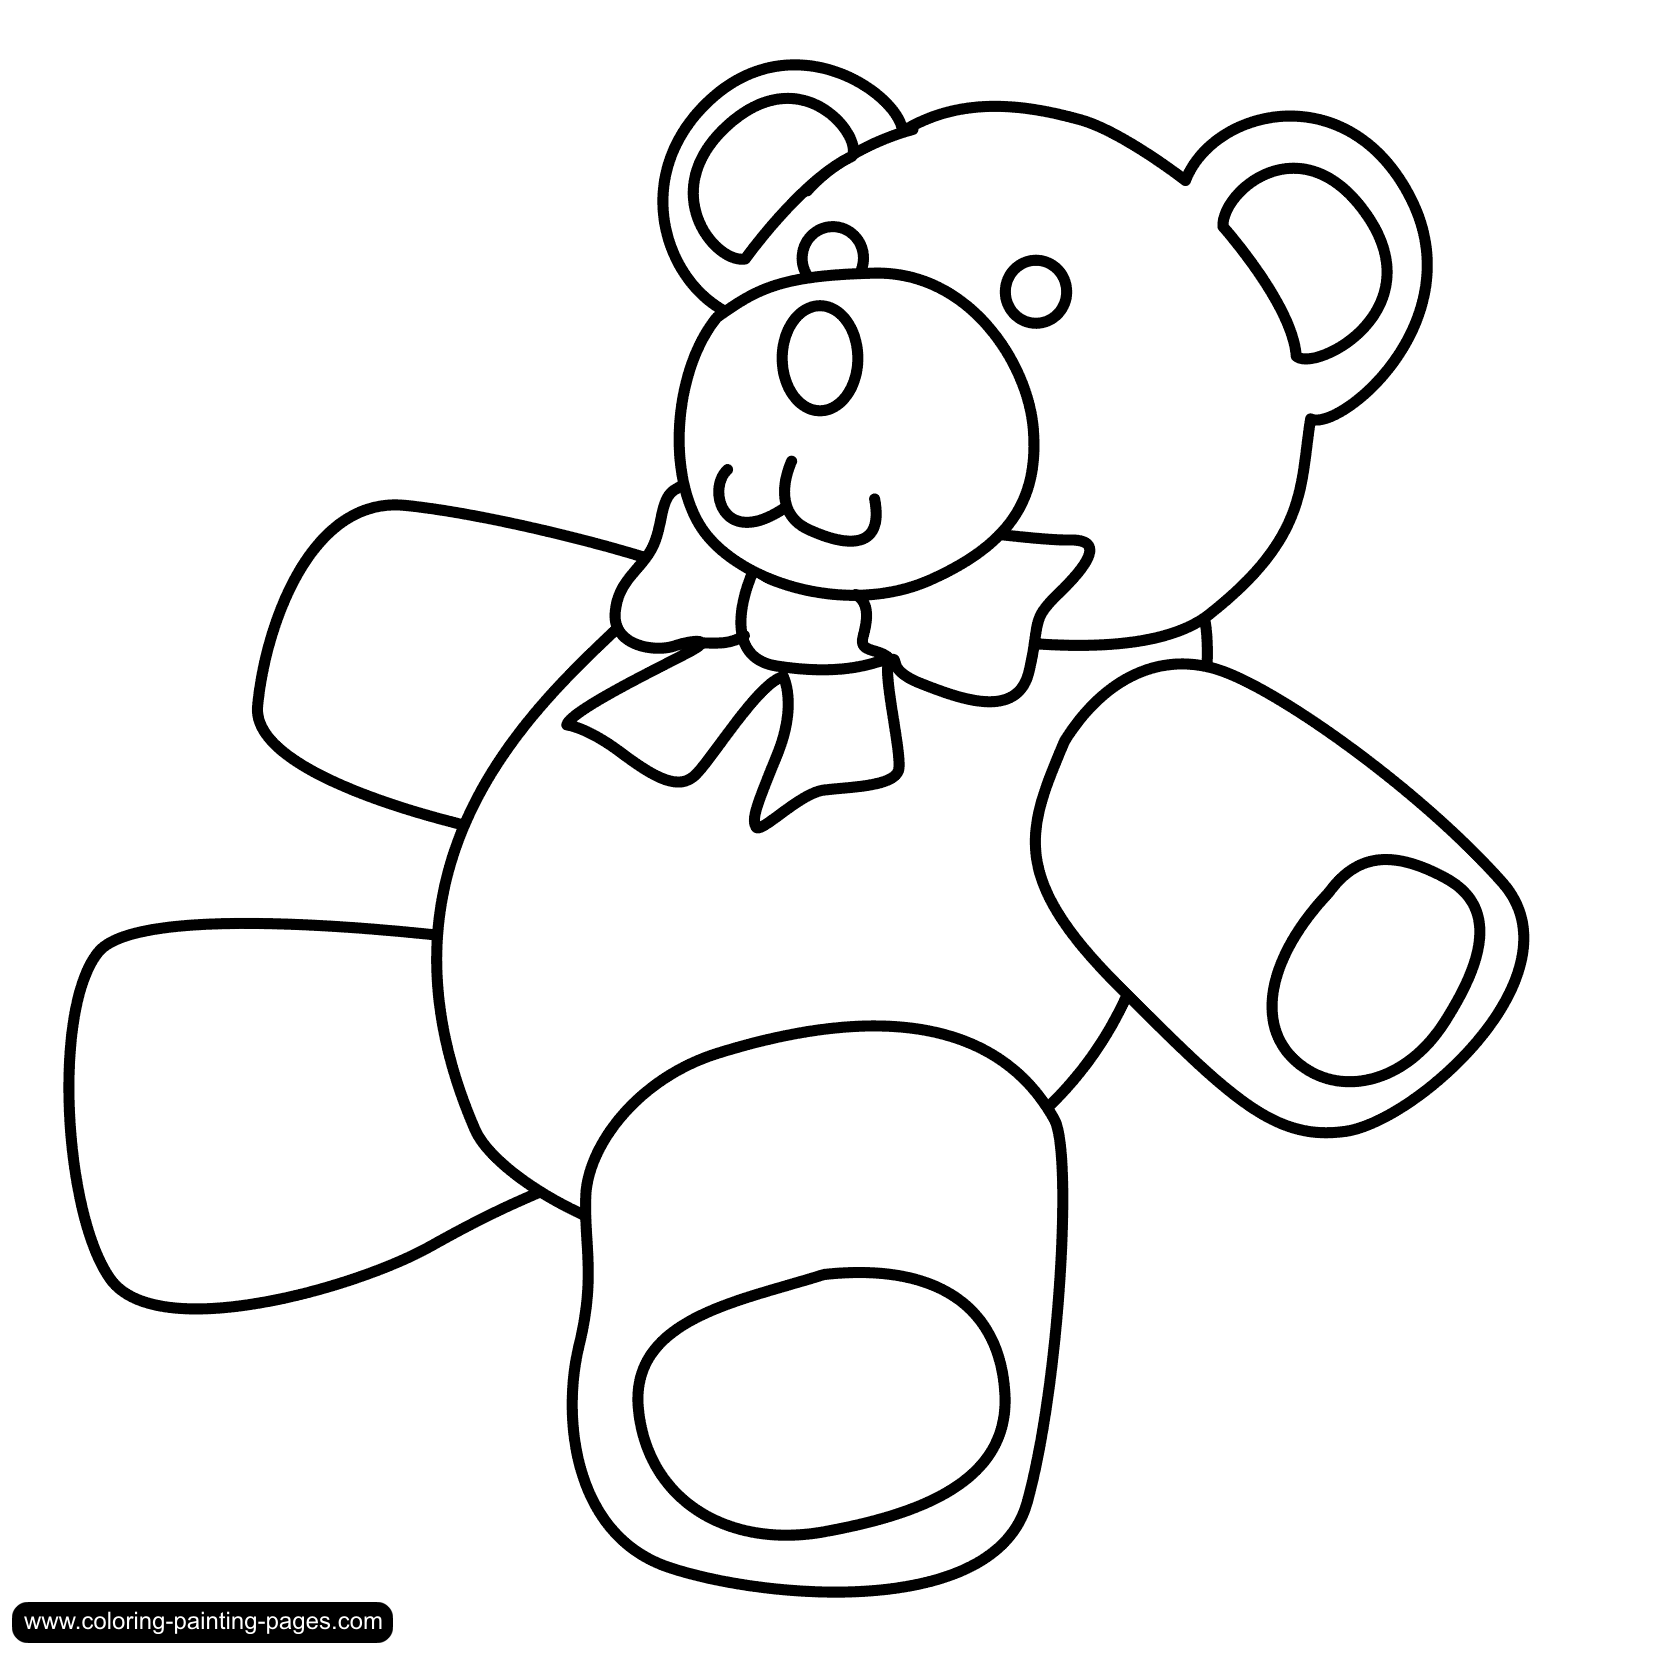 Teddy bear  black and white free teddy bear clipart black and white clipartfox